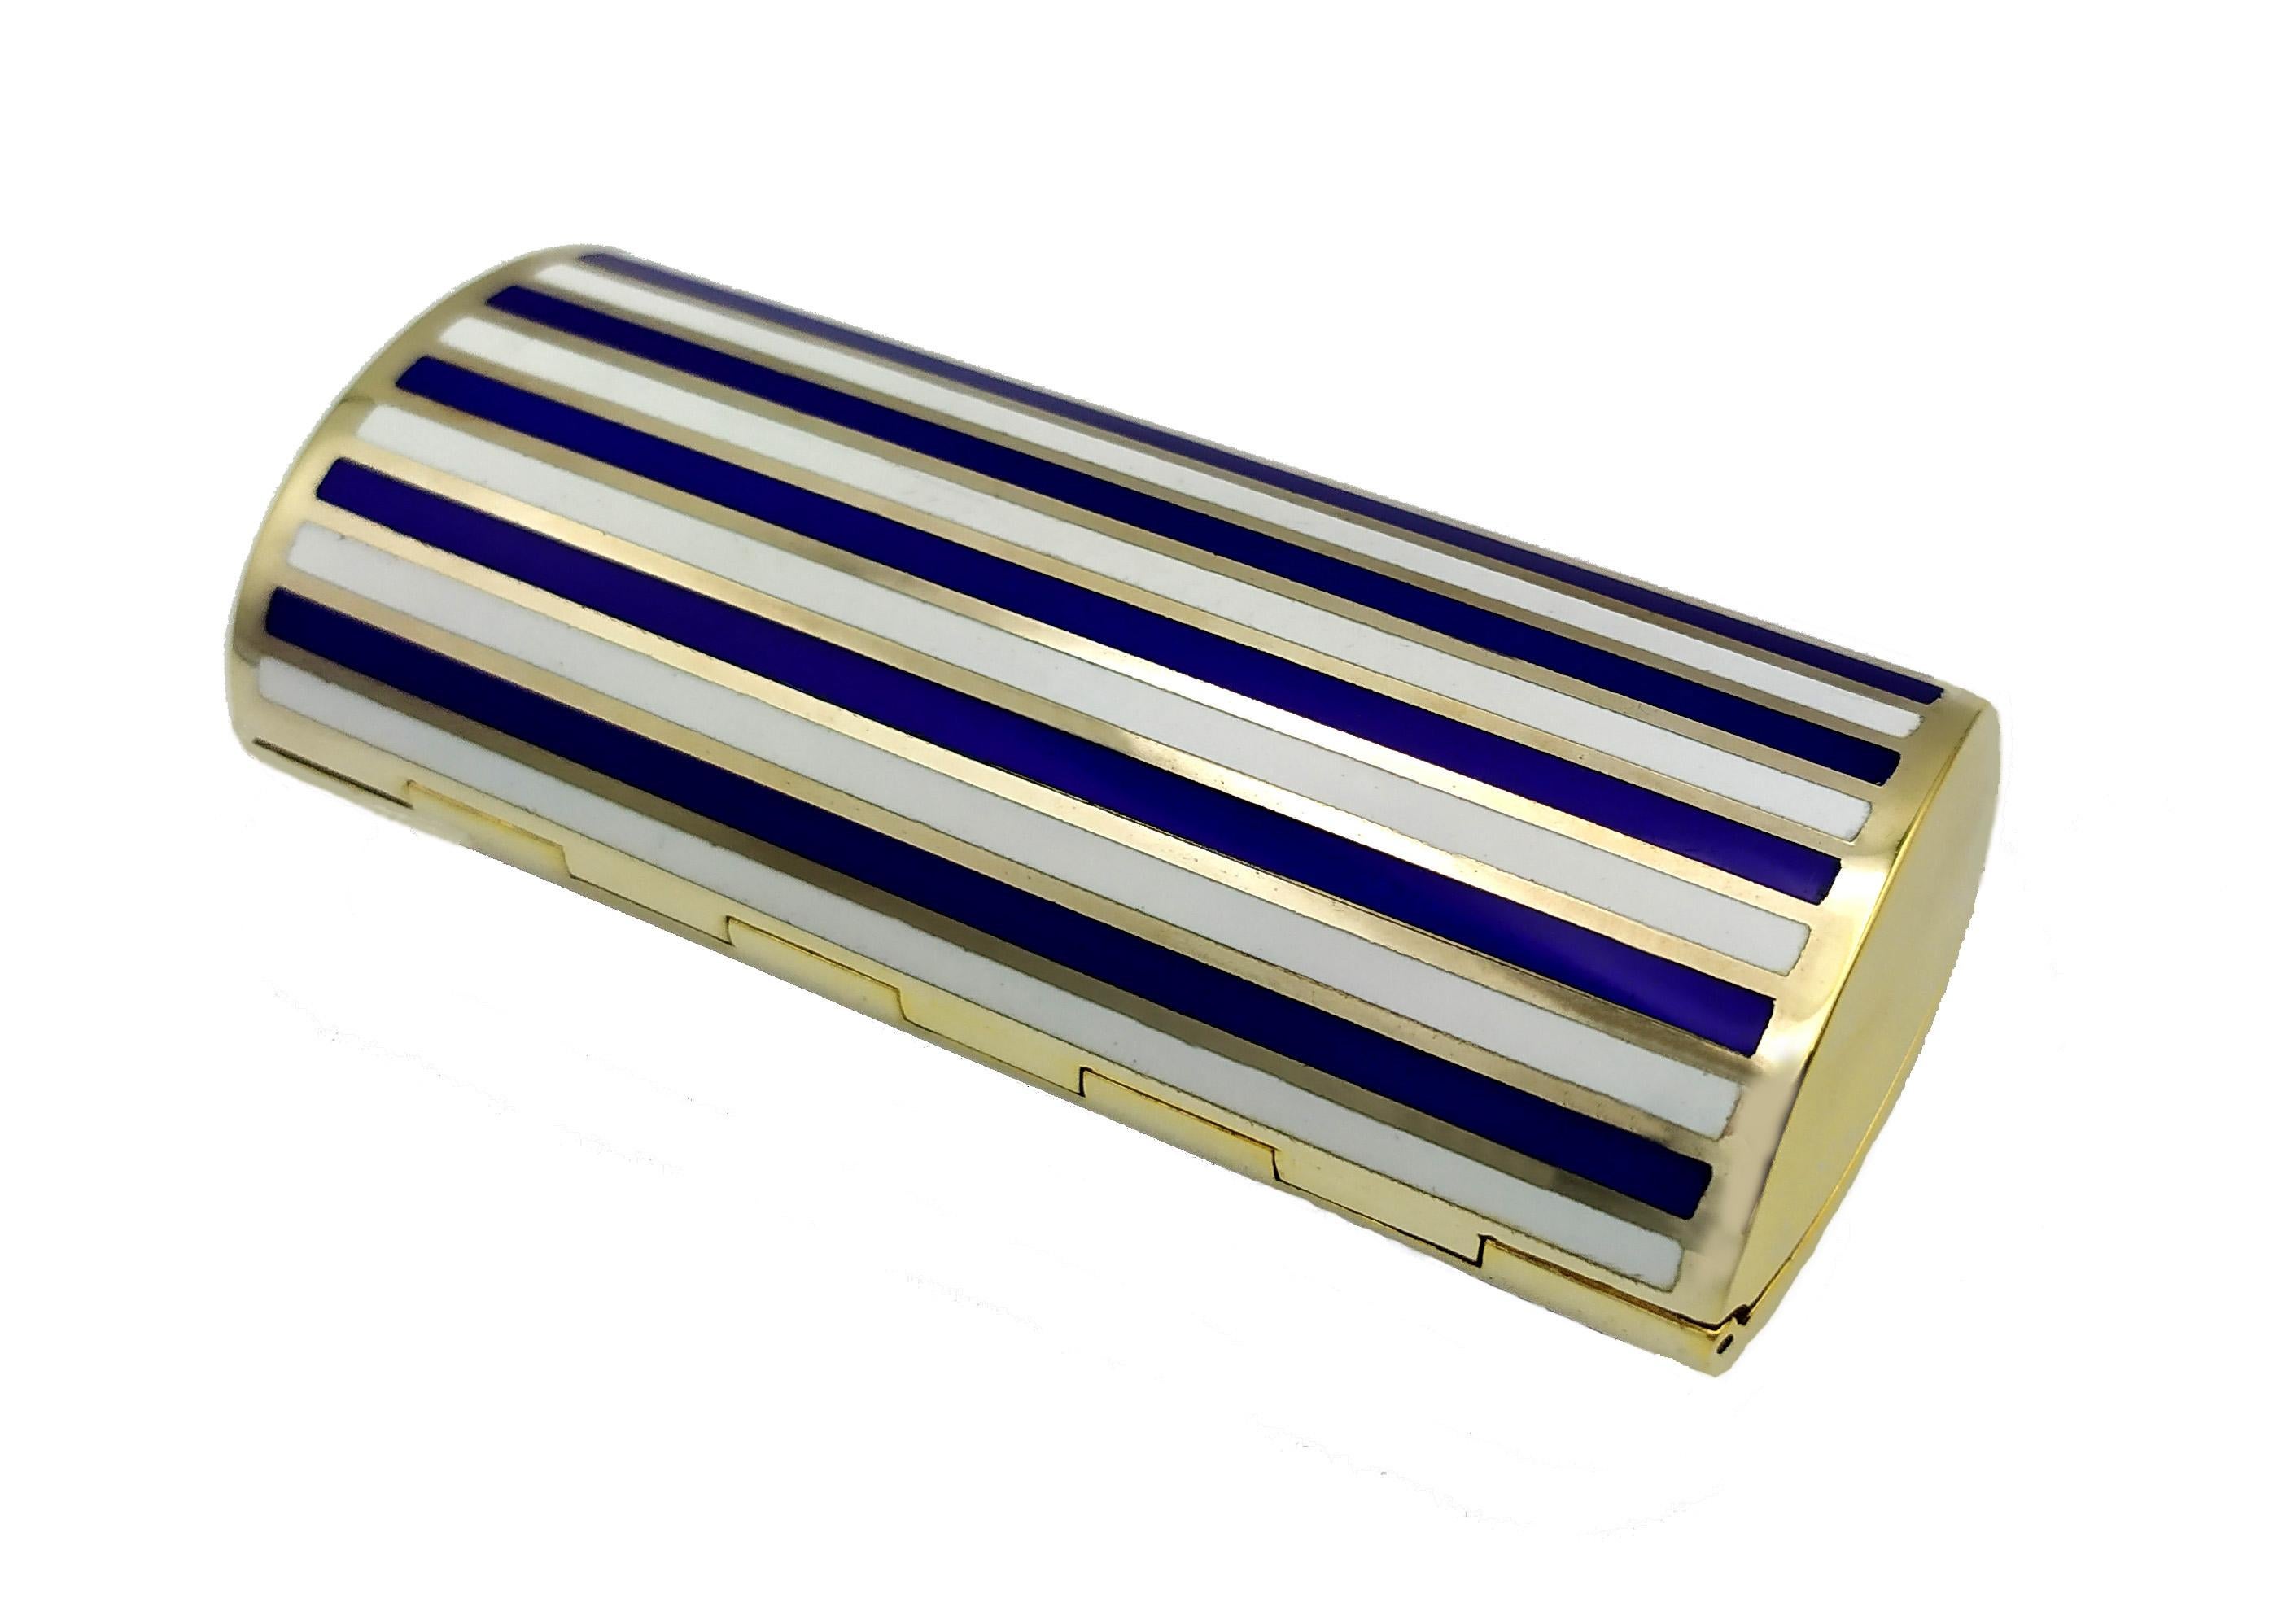 Late 20th Century Salimbeni Purse Cigarette Case Two-Color Enamel Stripes Blue and White